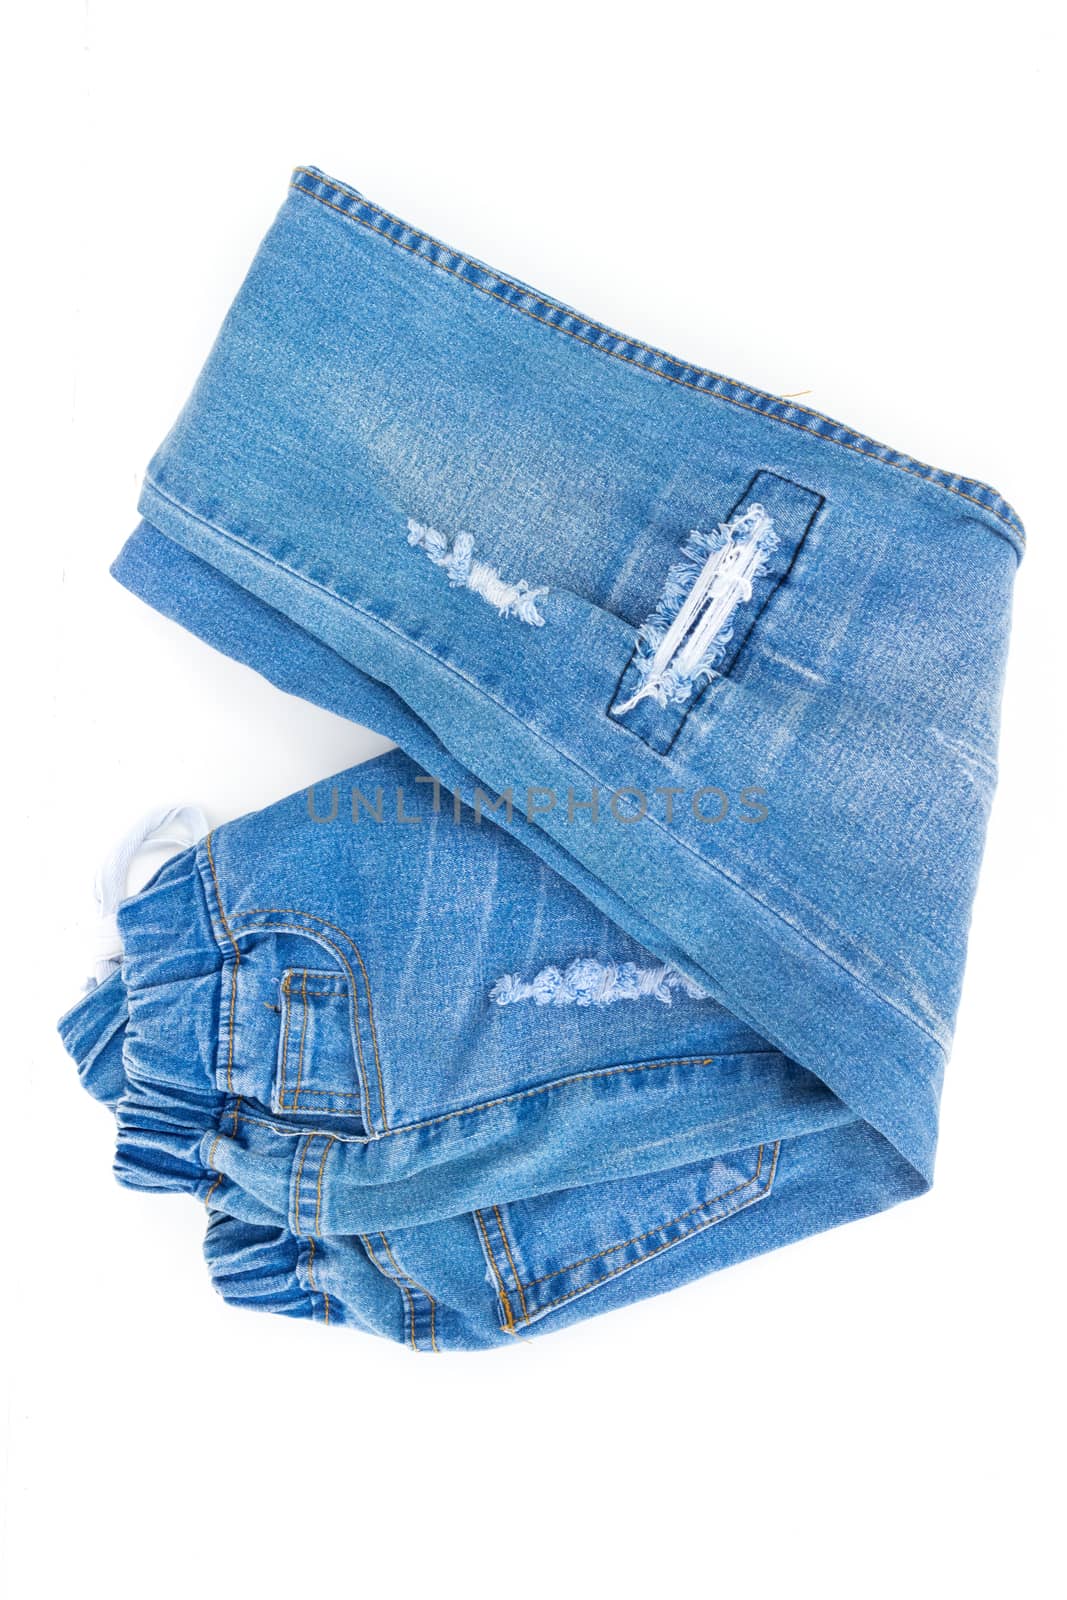 Destroyed jeans, Fold pants on white background by pt.pongsak@gmail.com